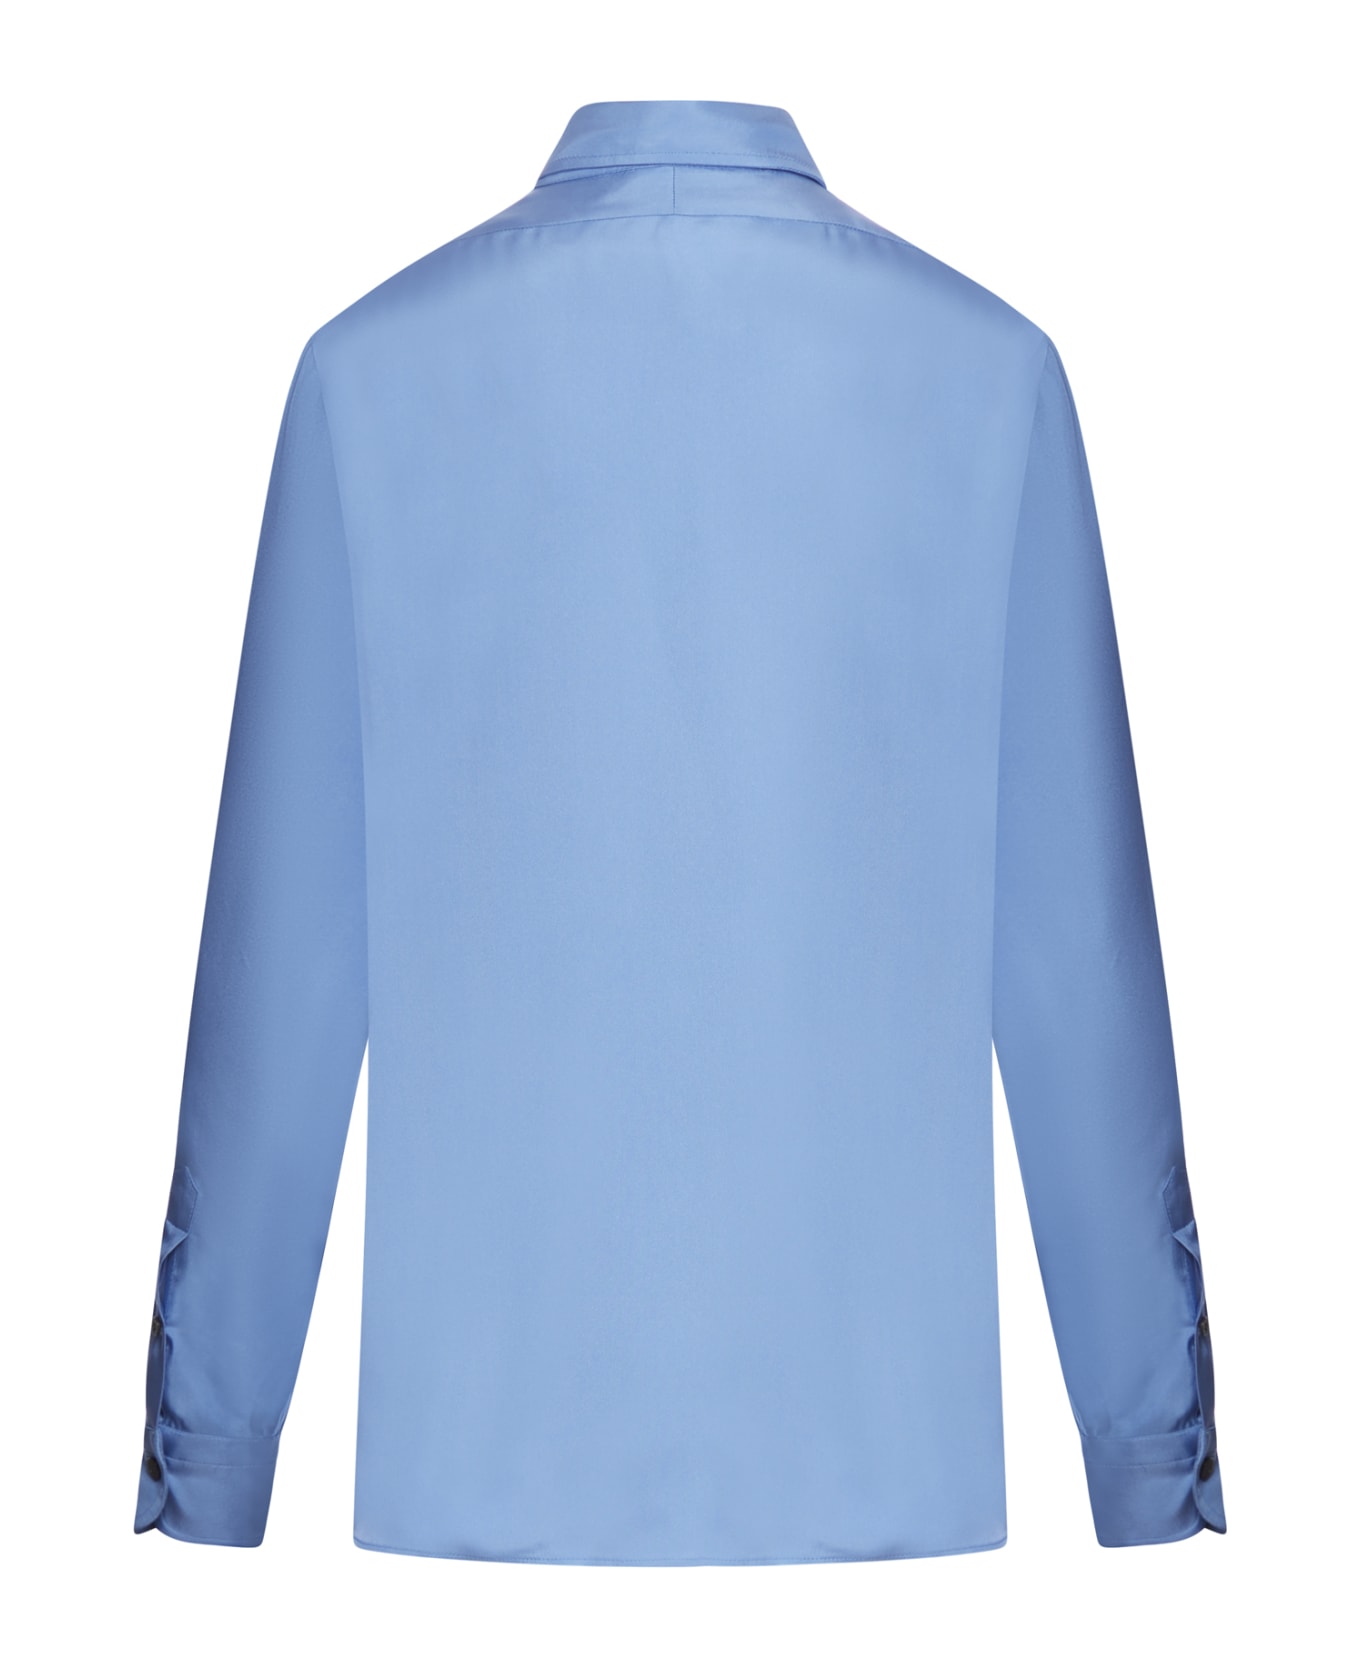 Tom Ford Fluid Viscose Silk Twill Shirt - Stone Blue